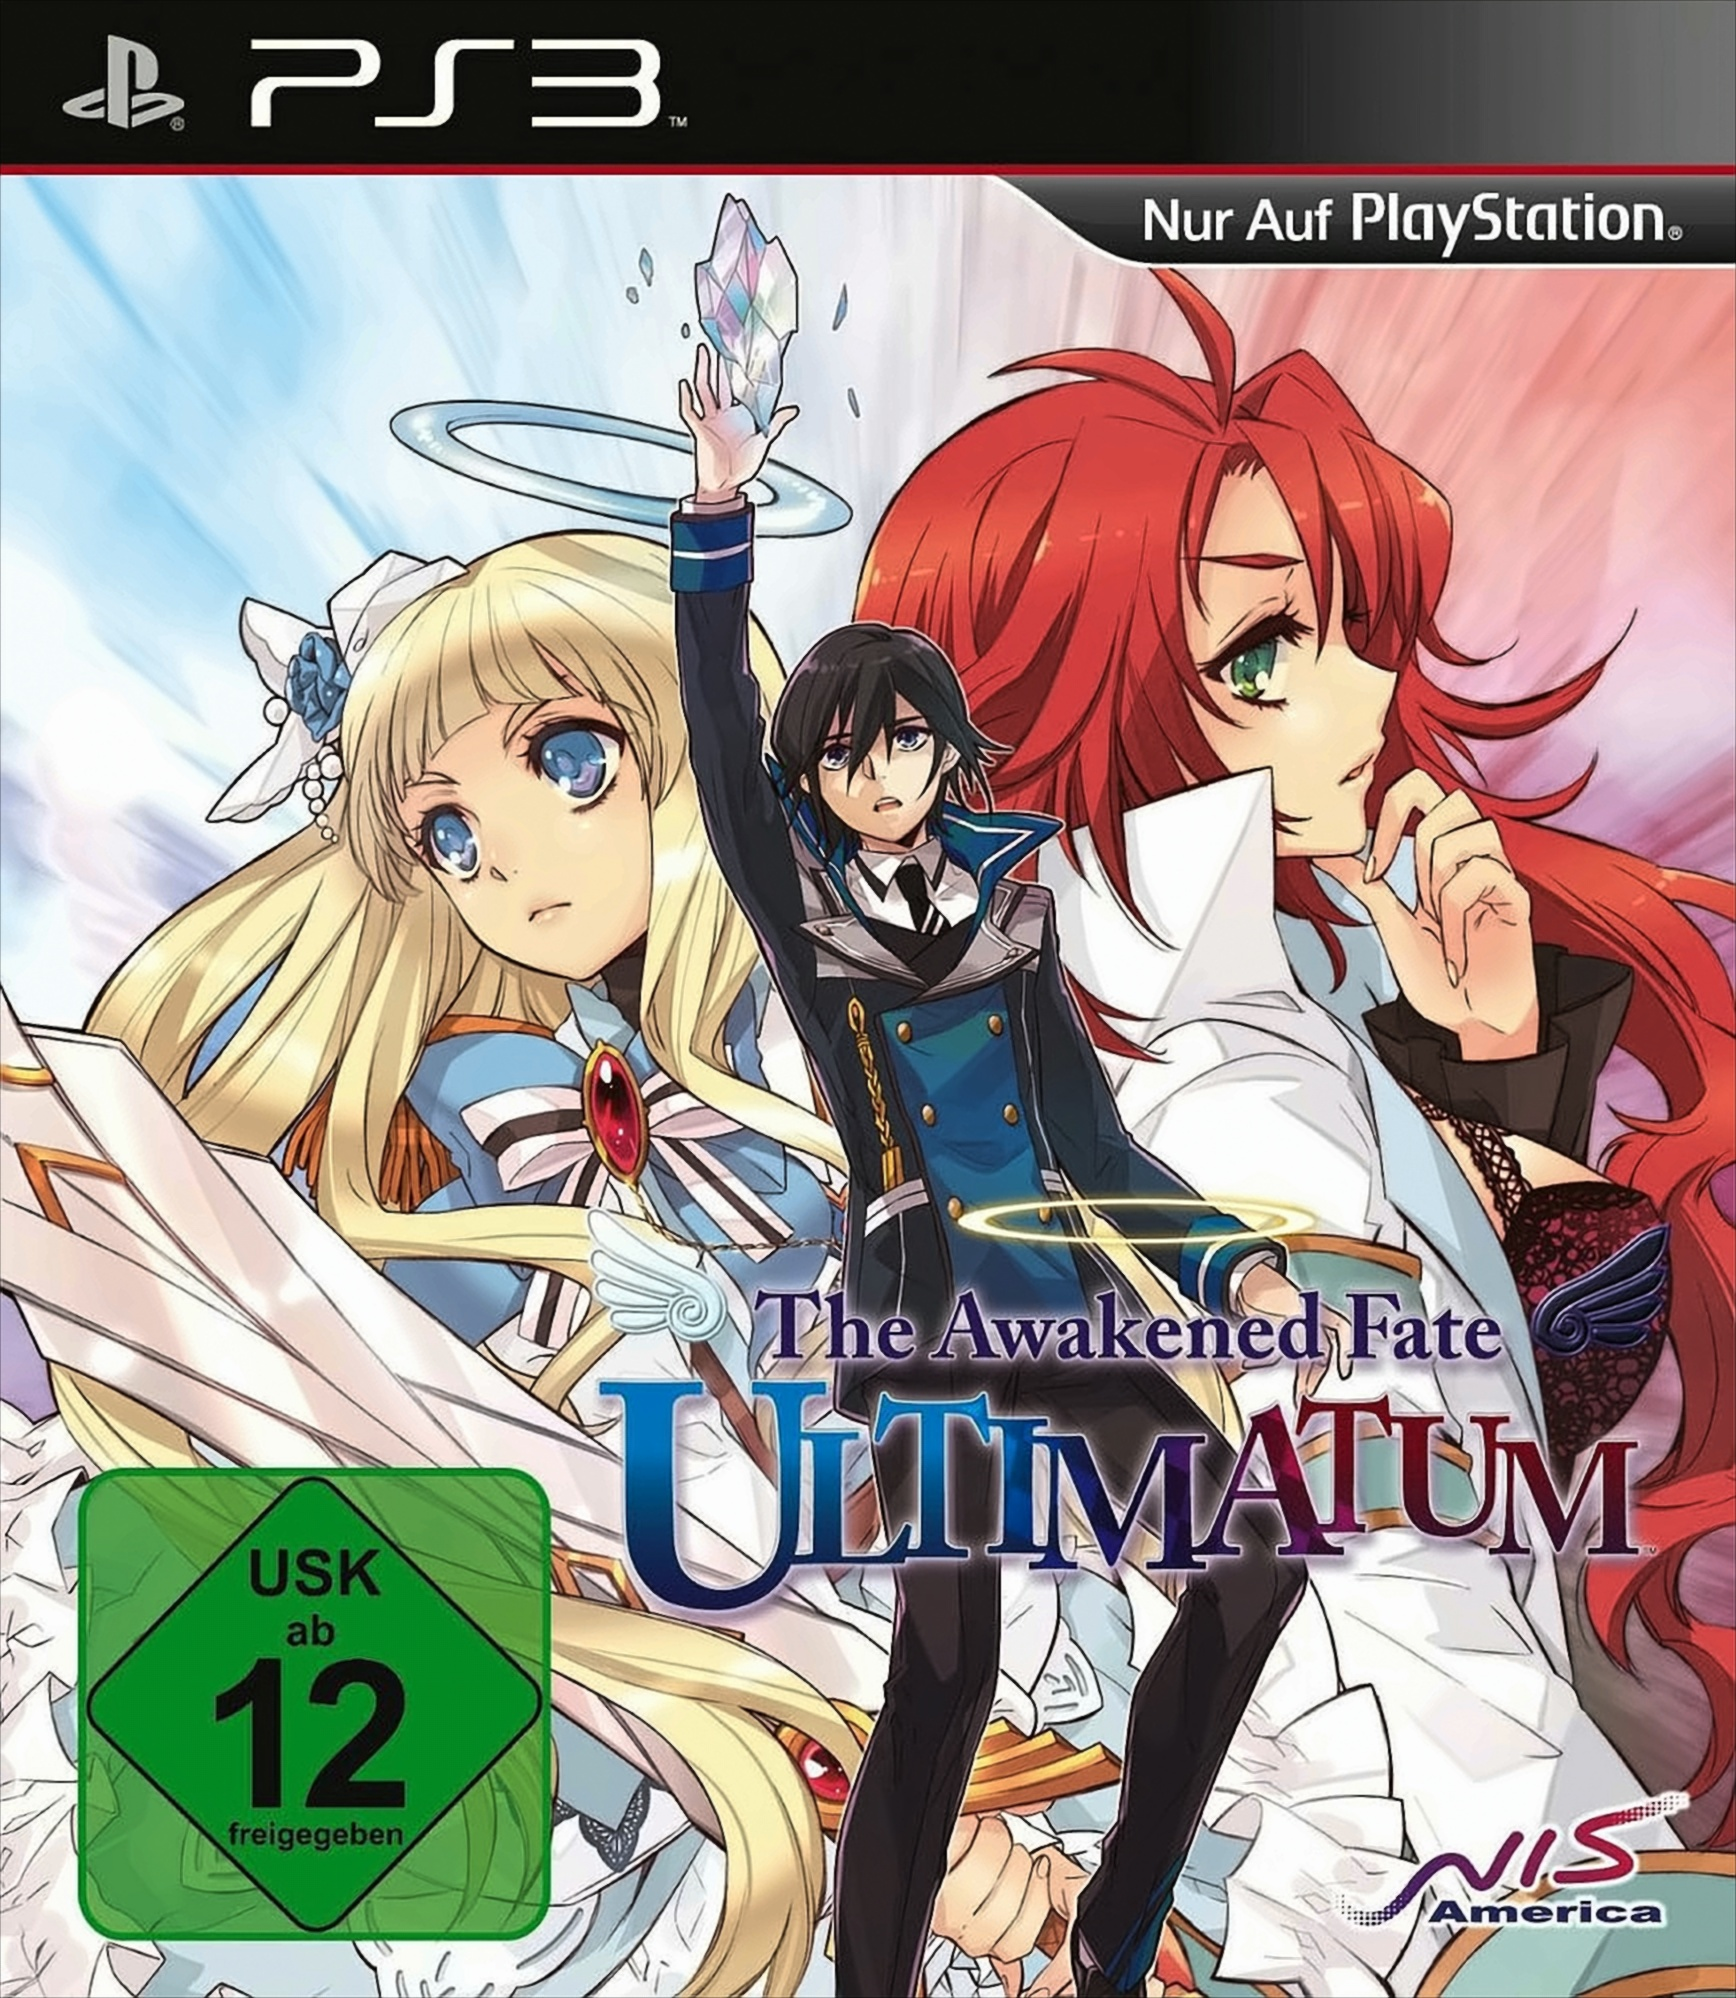 The Awakened Fate Ultimatum 3] [PlayStation 